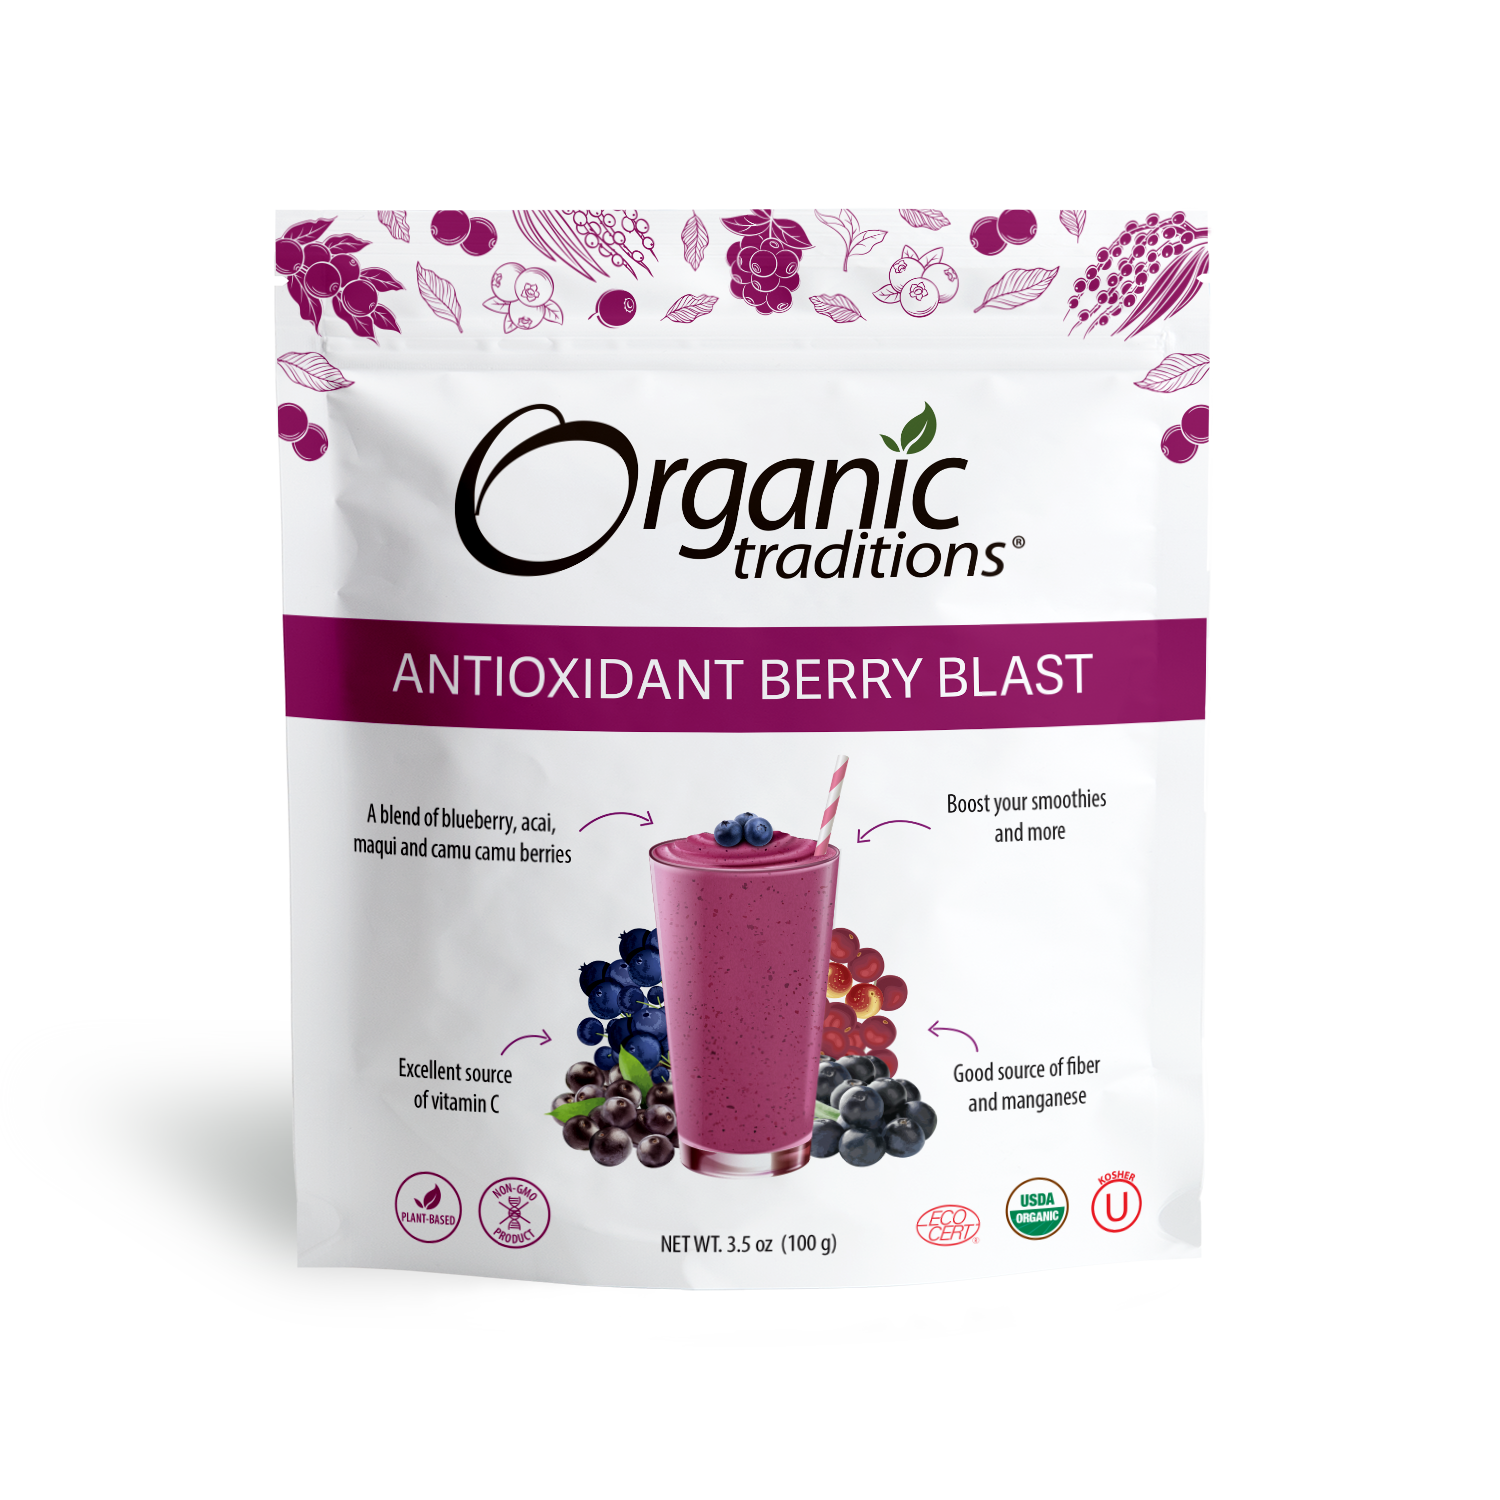 Organic Antioxidant Berry Blast